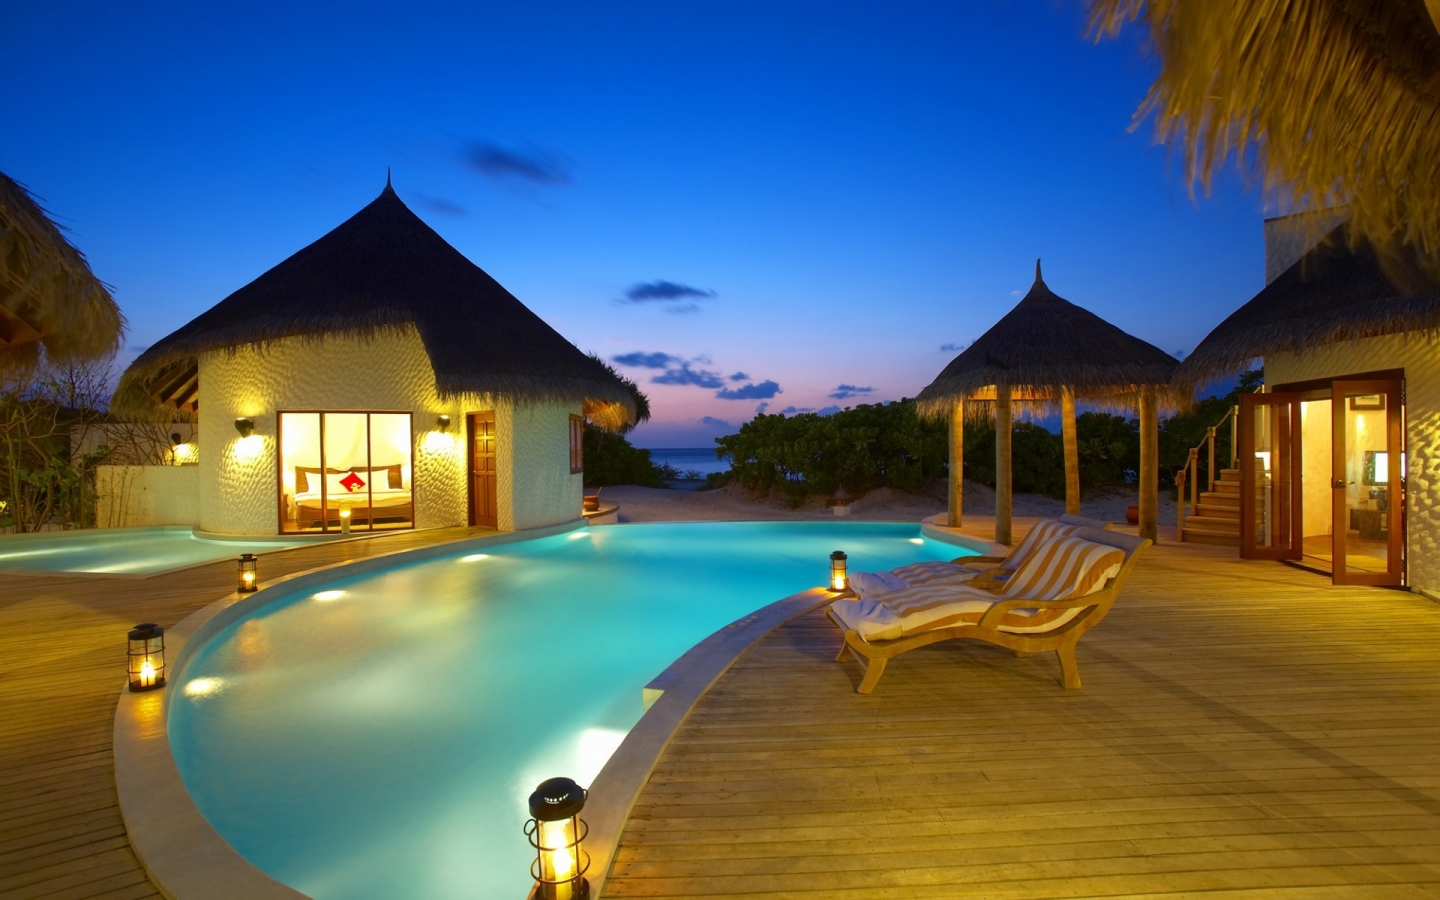 Maldives 5 Star Resort for 1440 x 900 widescreen resolution